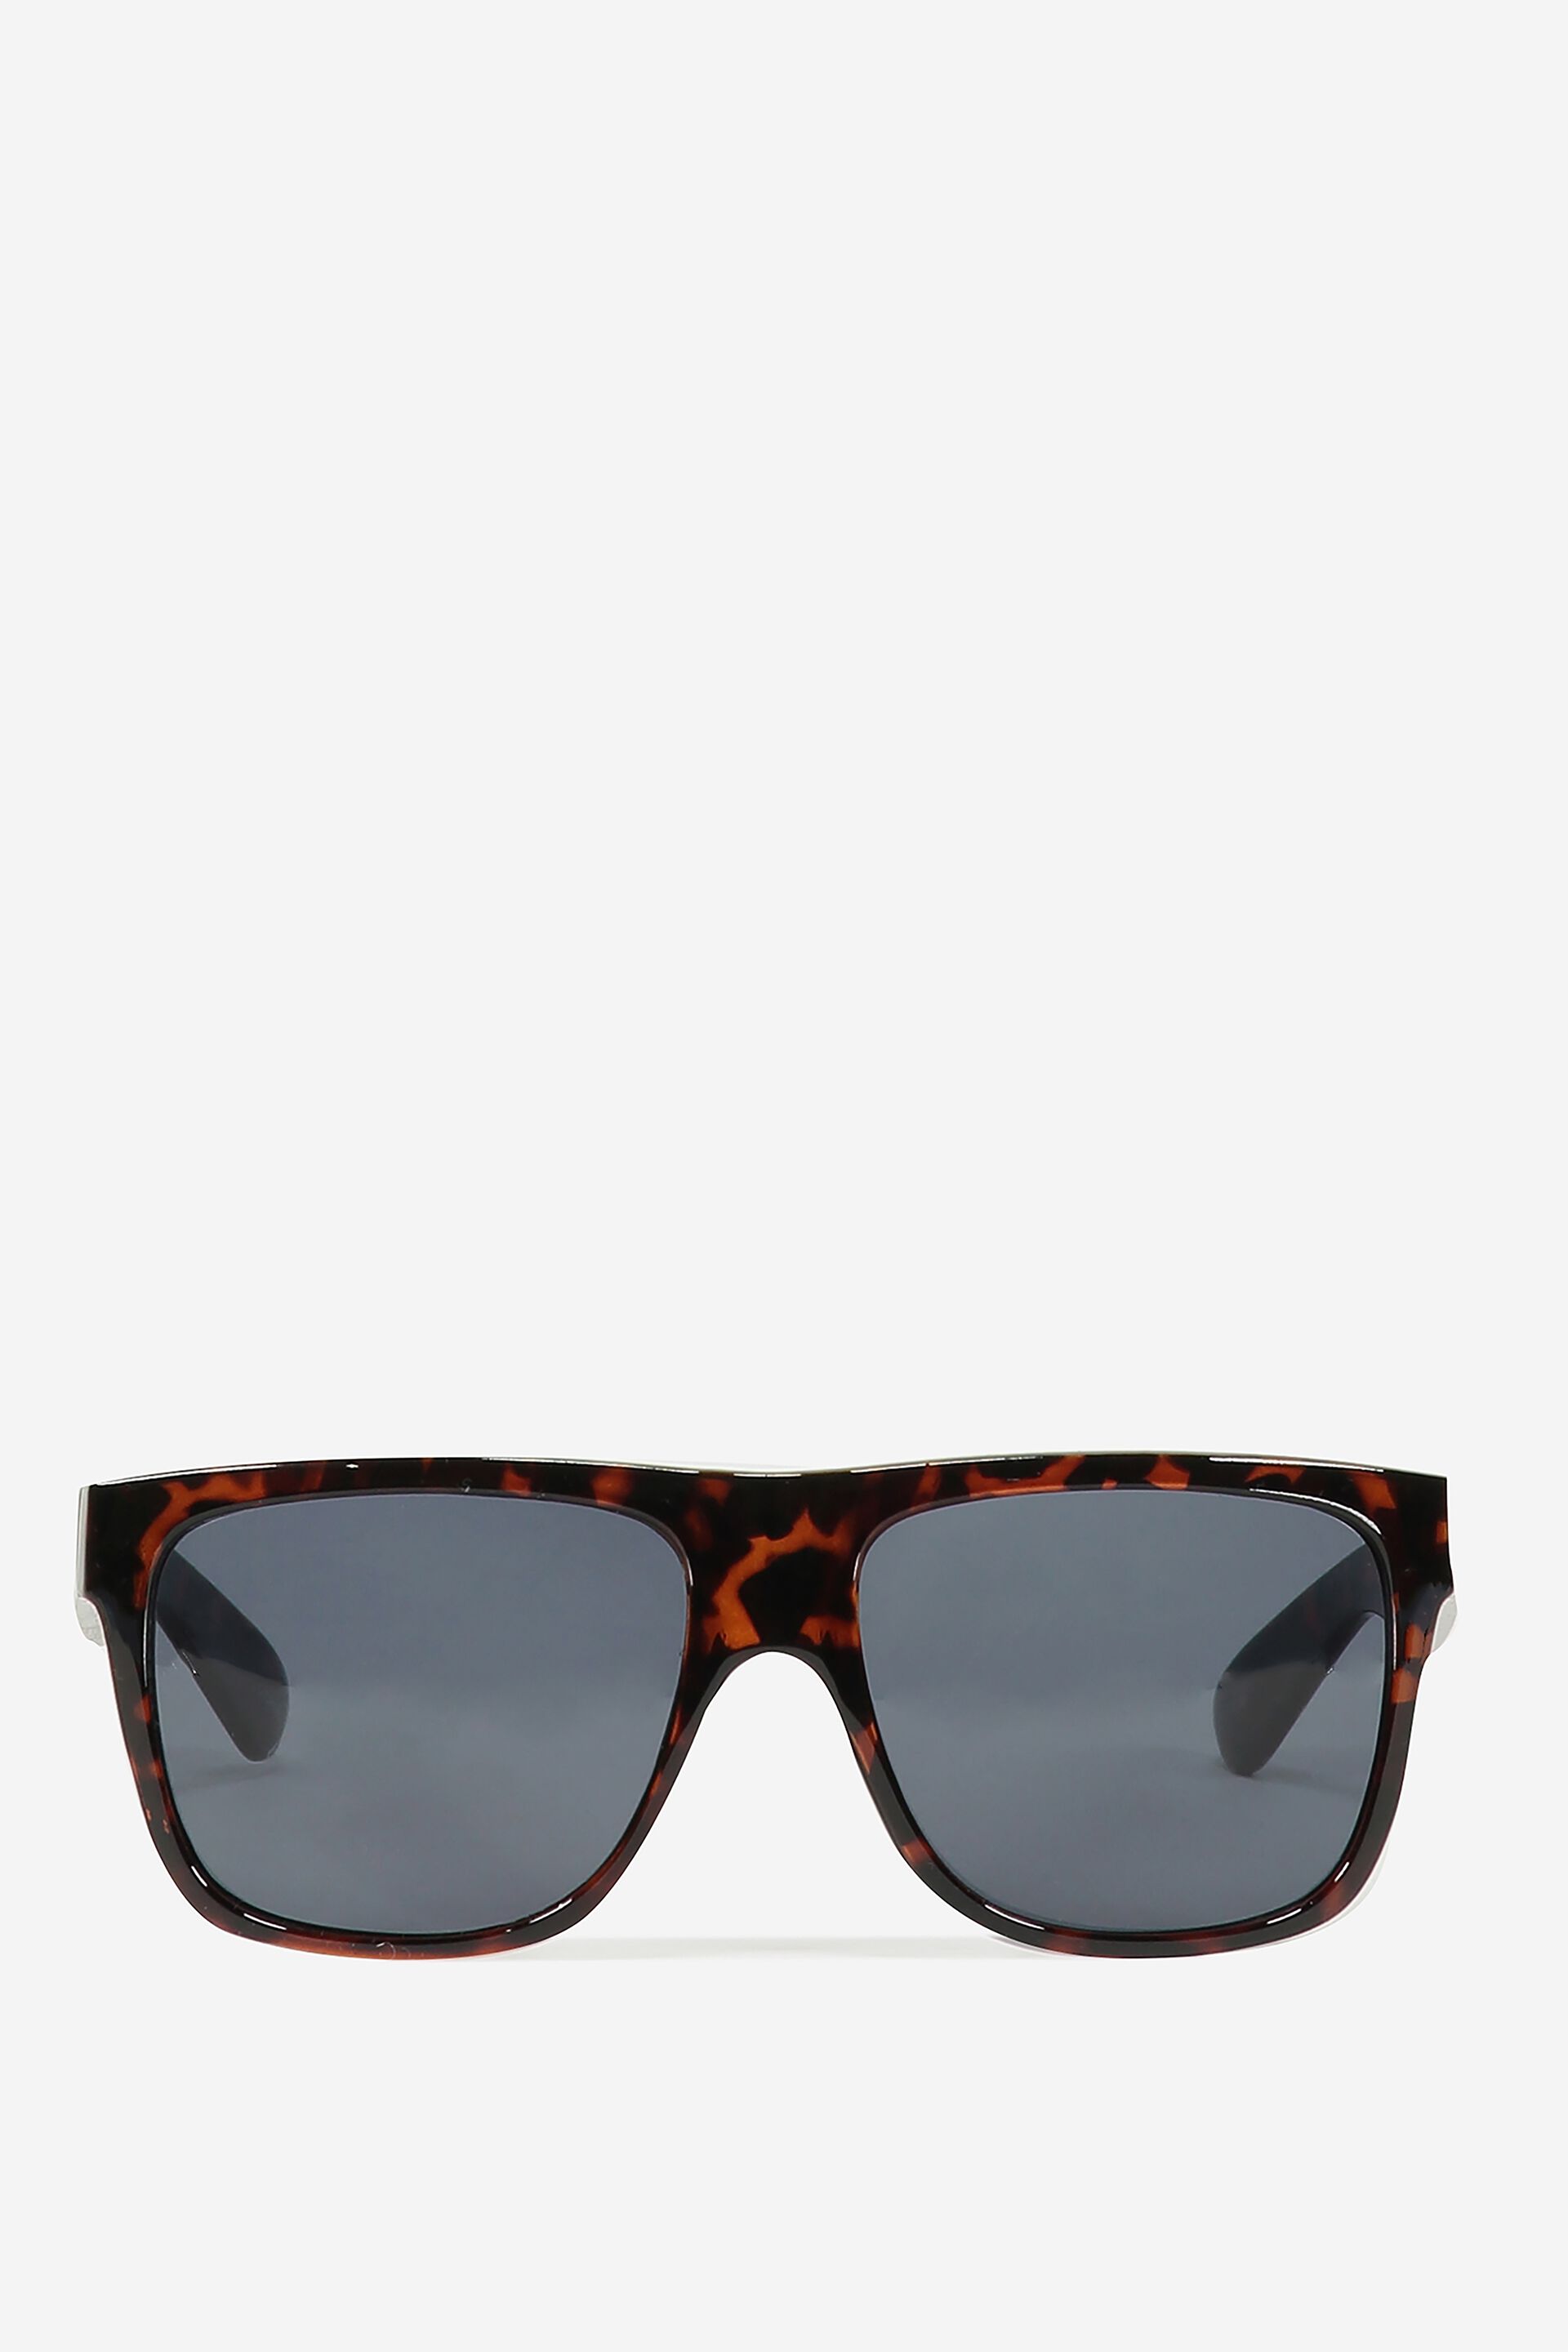 tommy flat top sunglasses